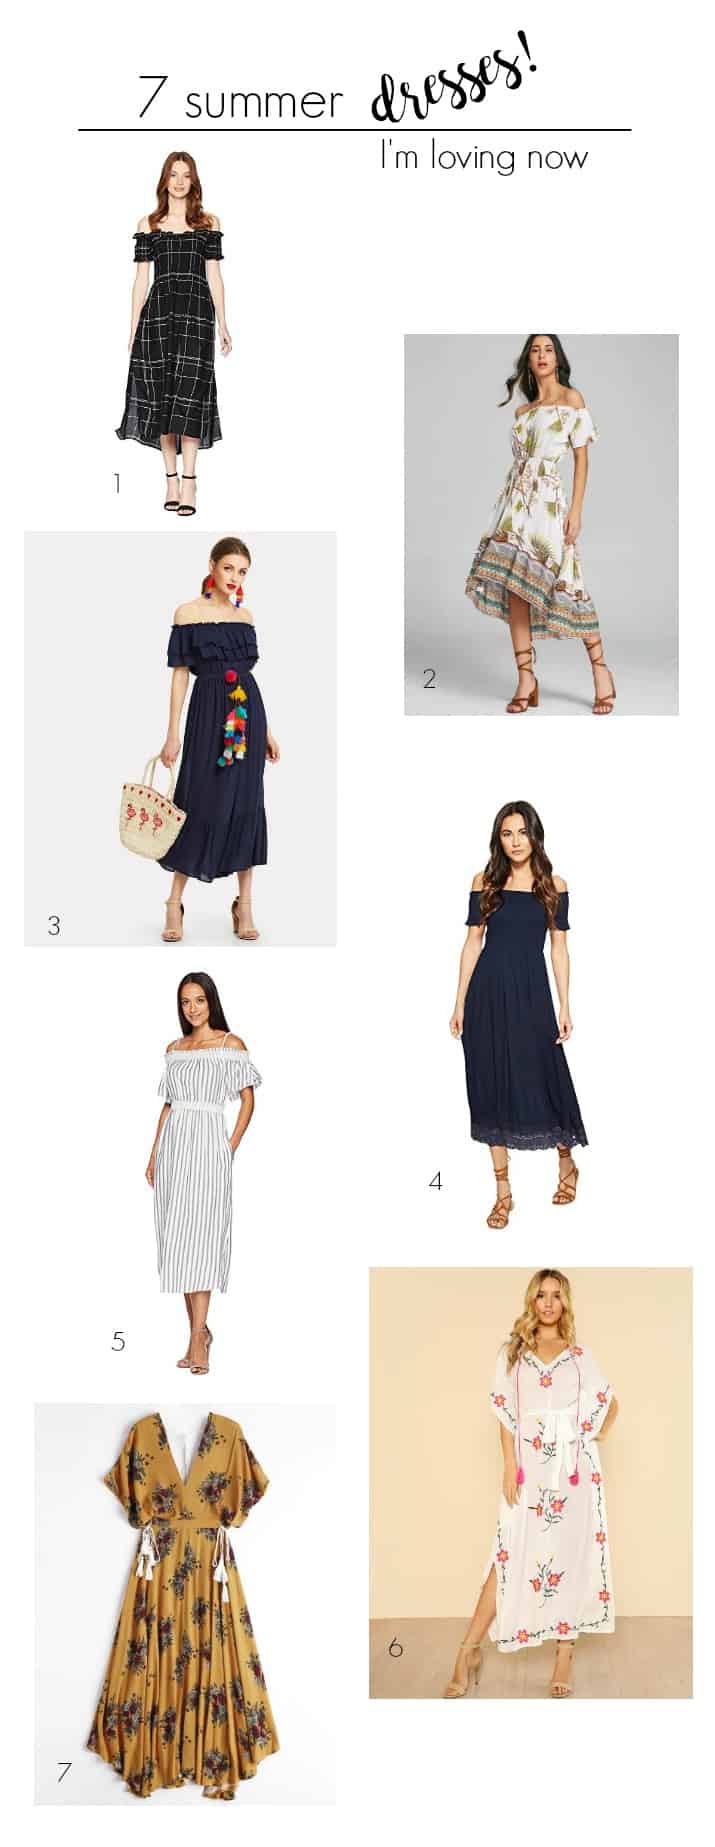 7 summer dresses